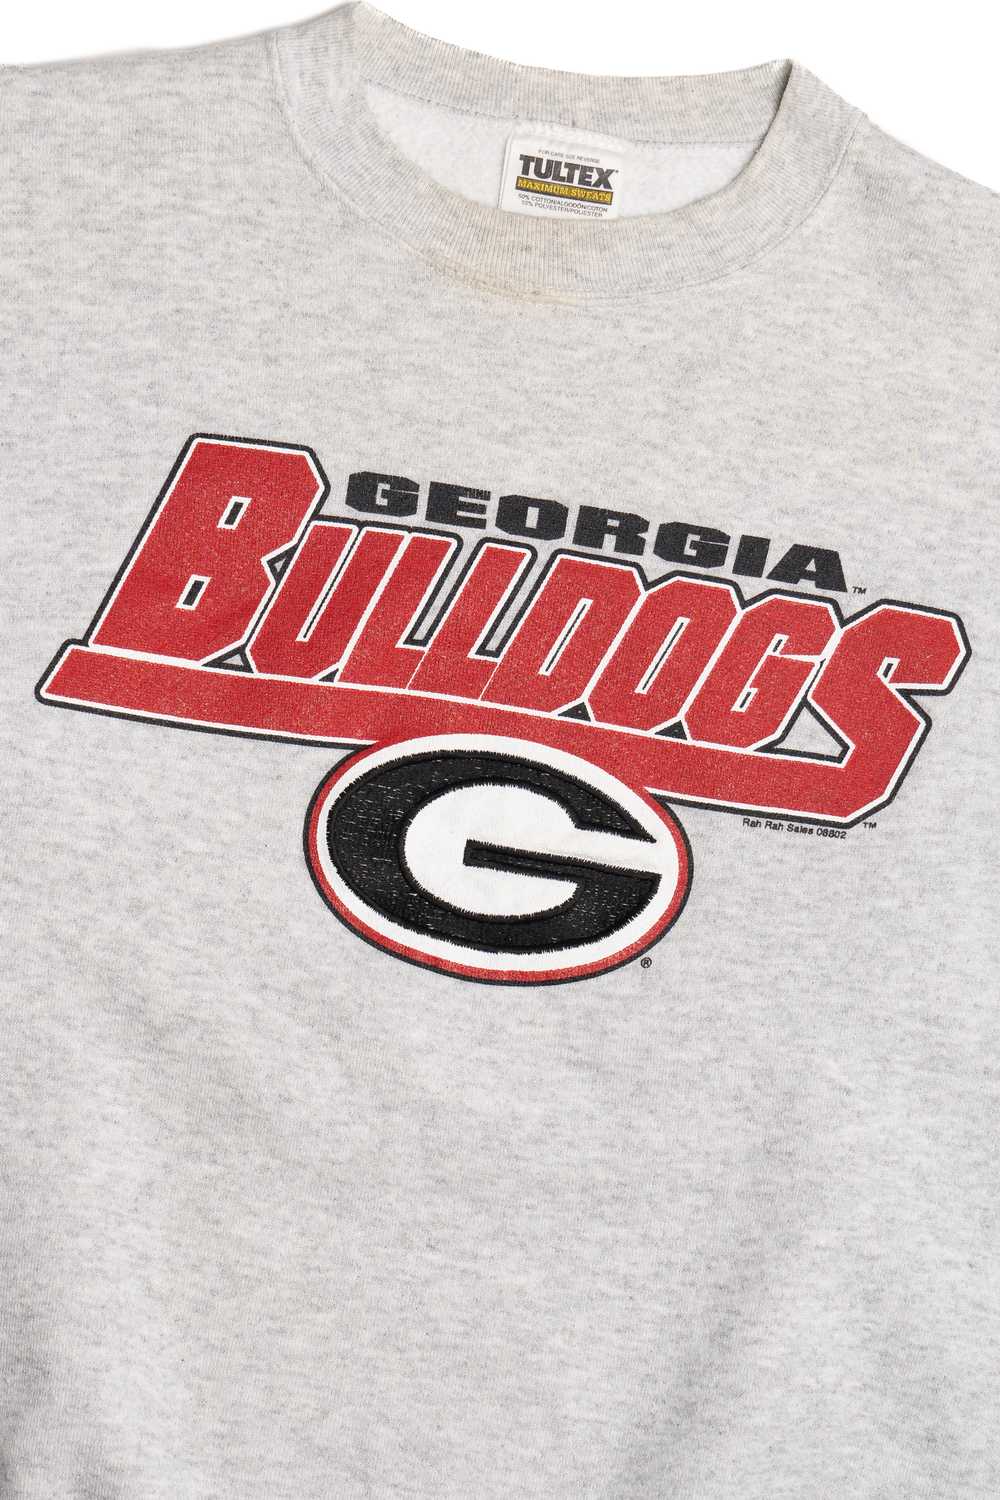 Vintage "Georgia Bulldogs" Sweatshirt - image 2